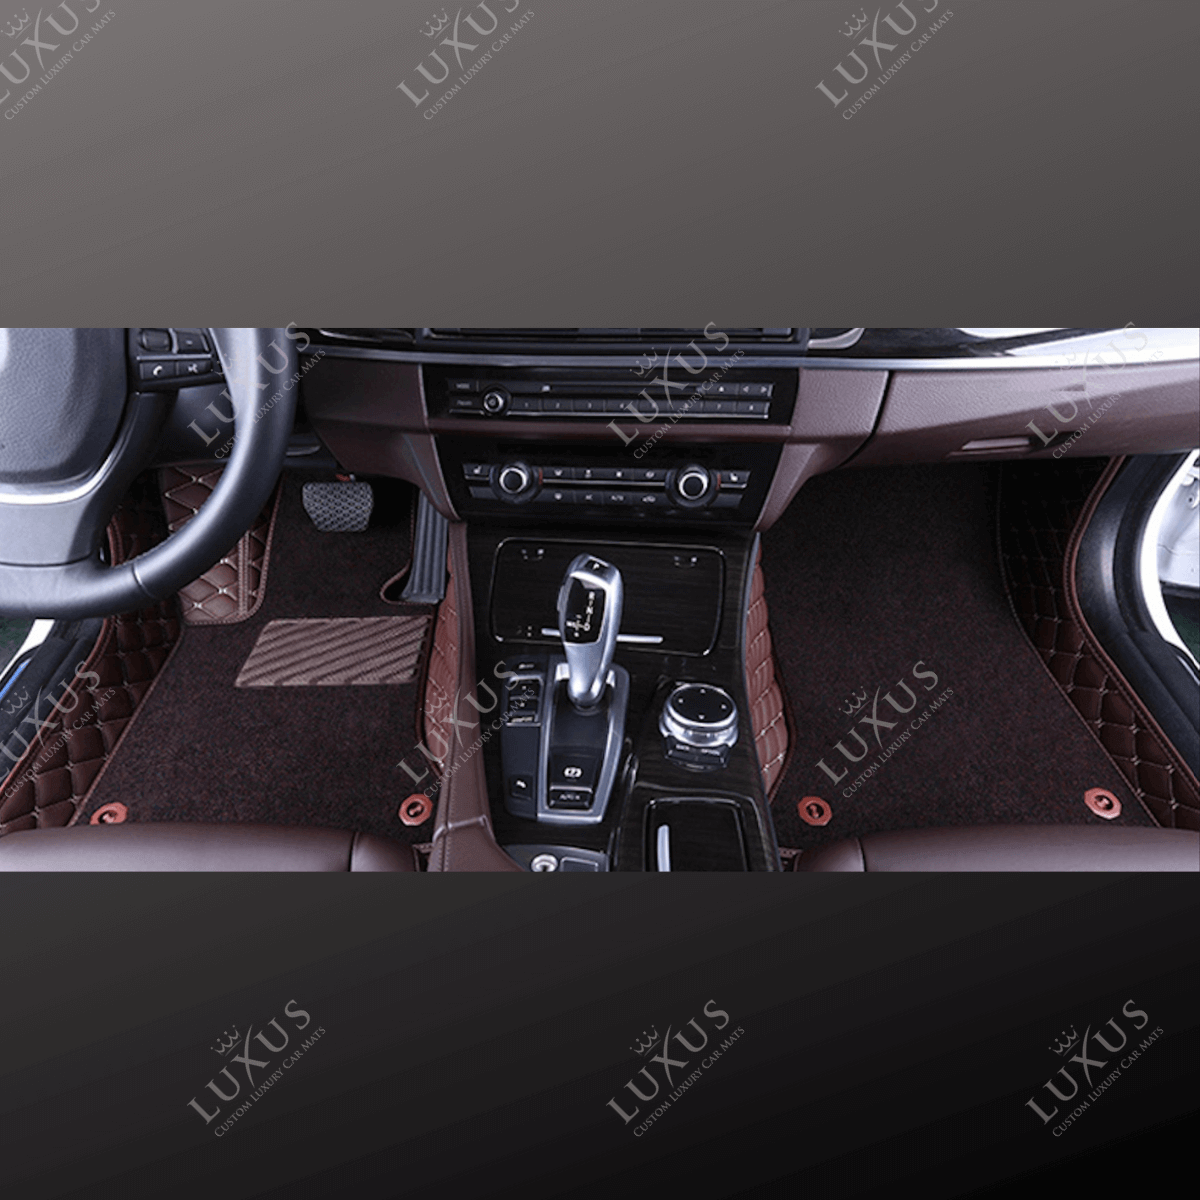 Chocolate Brown Diamond Base & Brown Top Carpet Double Layer Luxury Car Mats Set